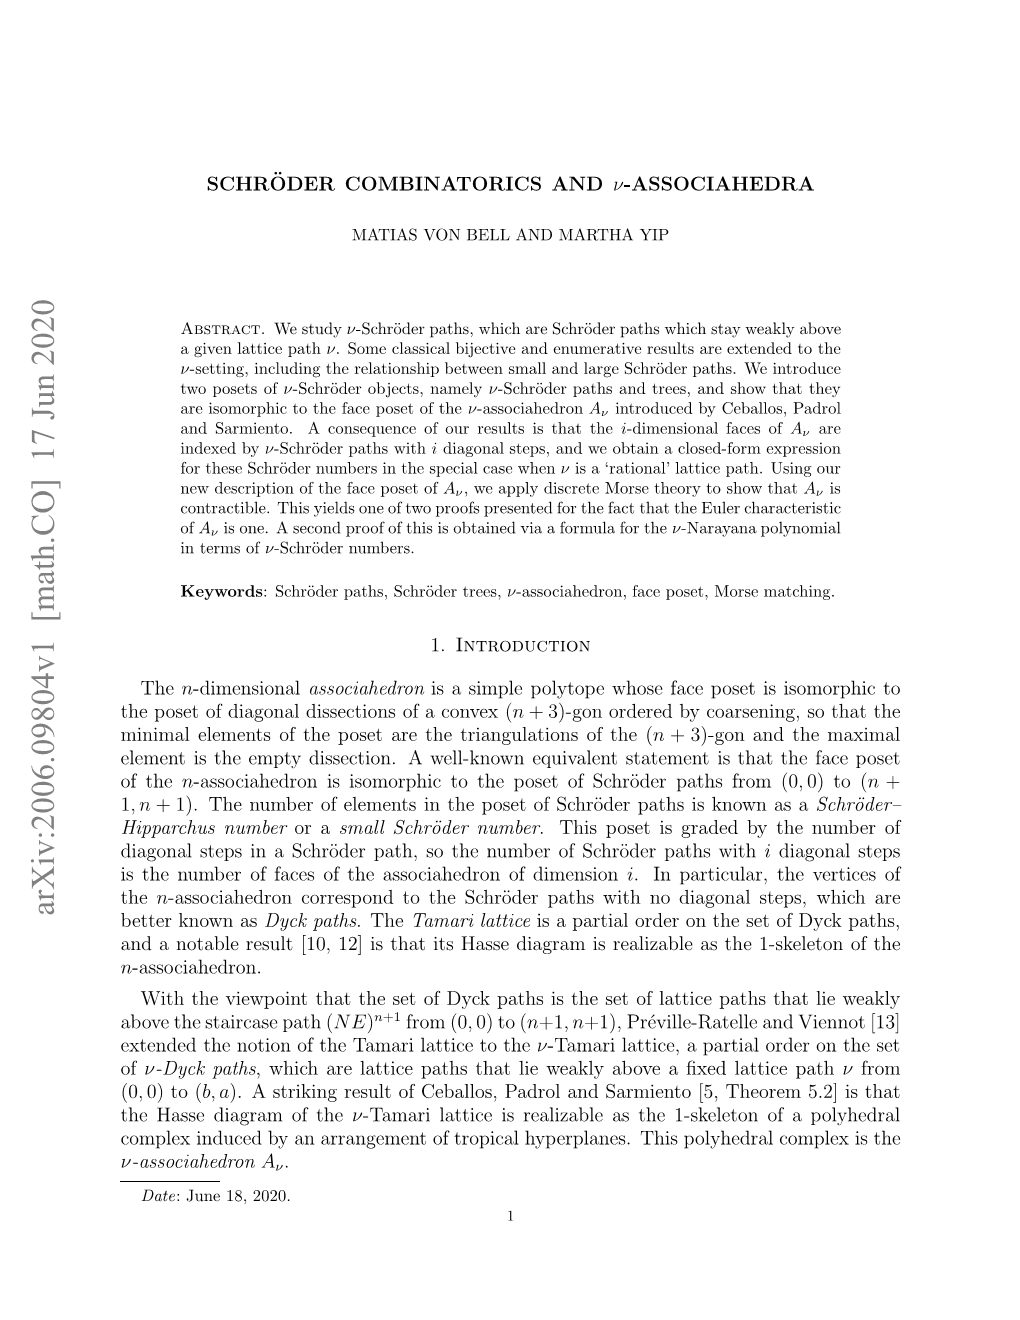 Schroder Combinatorics and $\Nu $-Associahedra